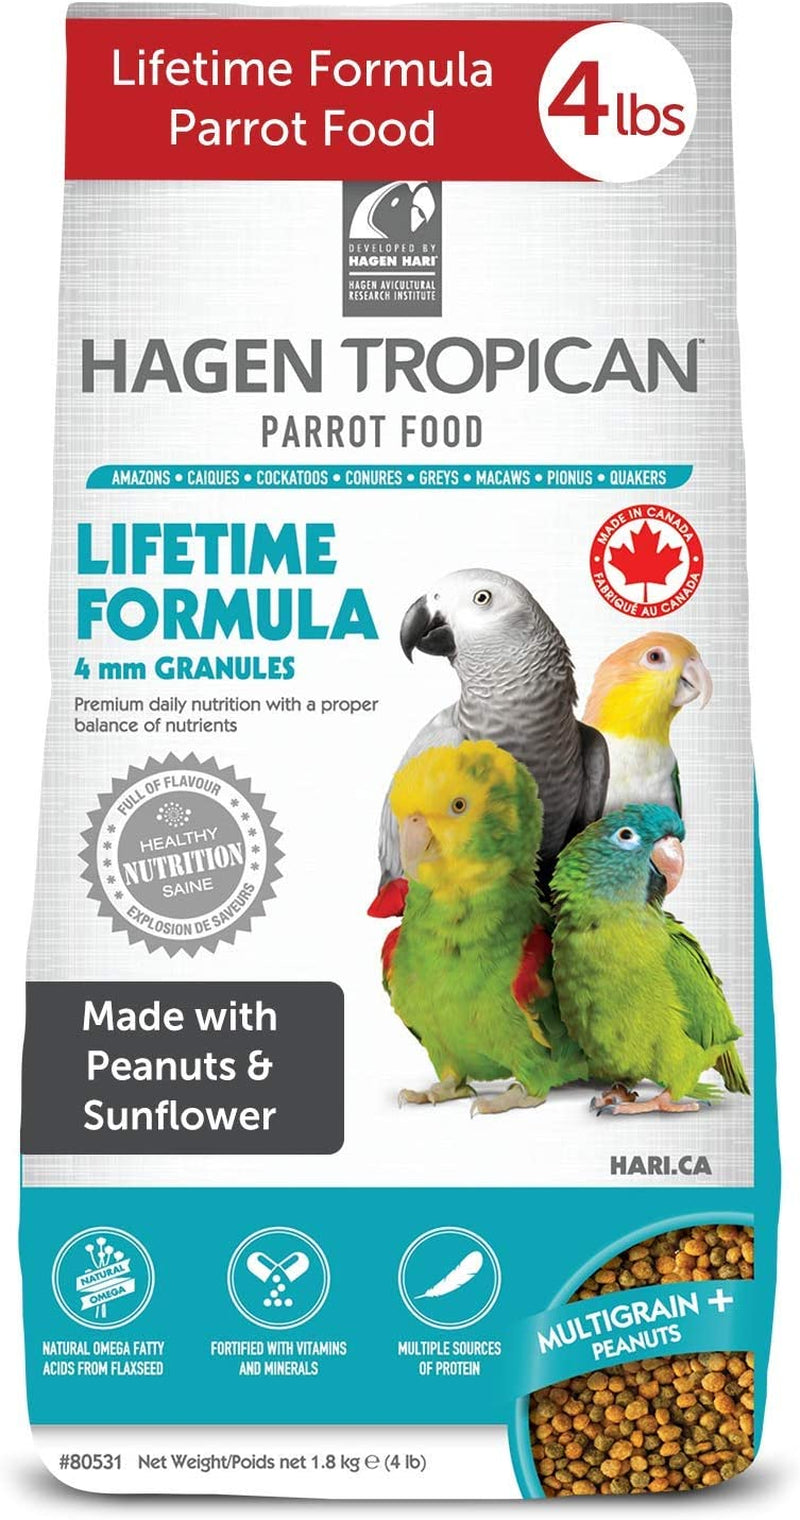 Hari Tropican Bird Food, Hagen Parrot Food with Peanuts & Sunflower Seeds, 4Mm Granules, Lifetime Formula, 4 Lb Bag